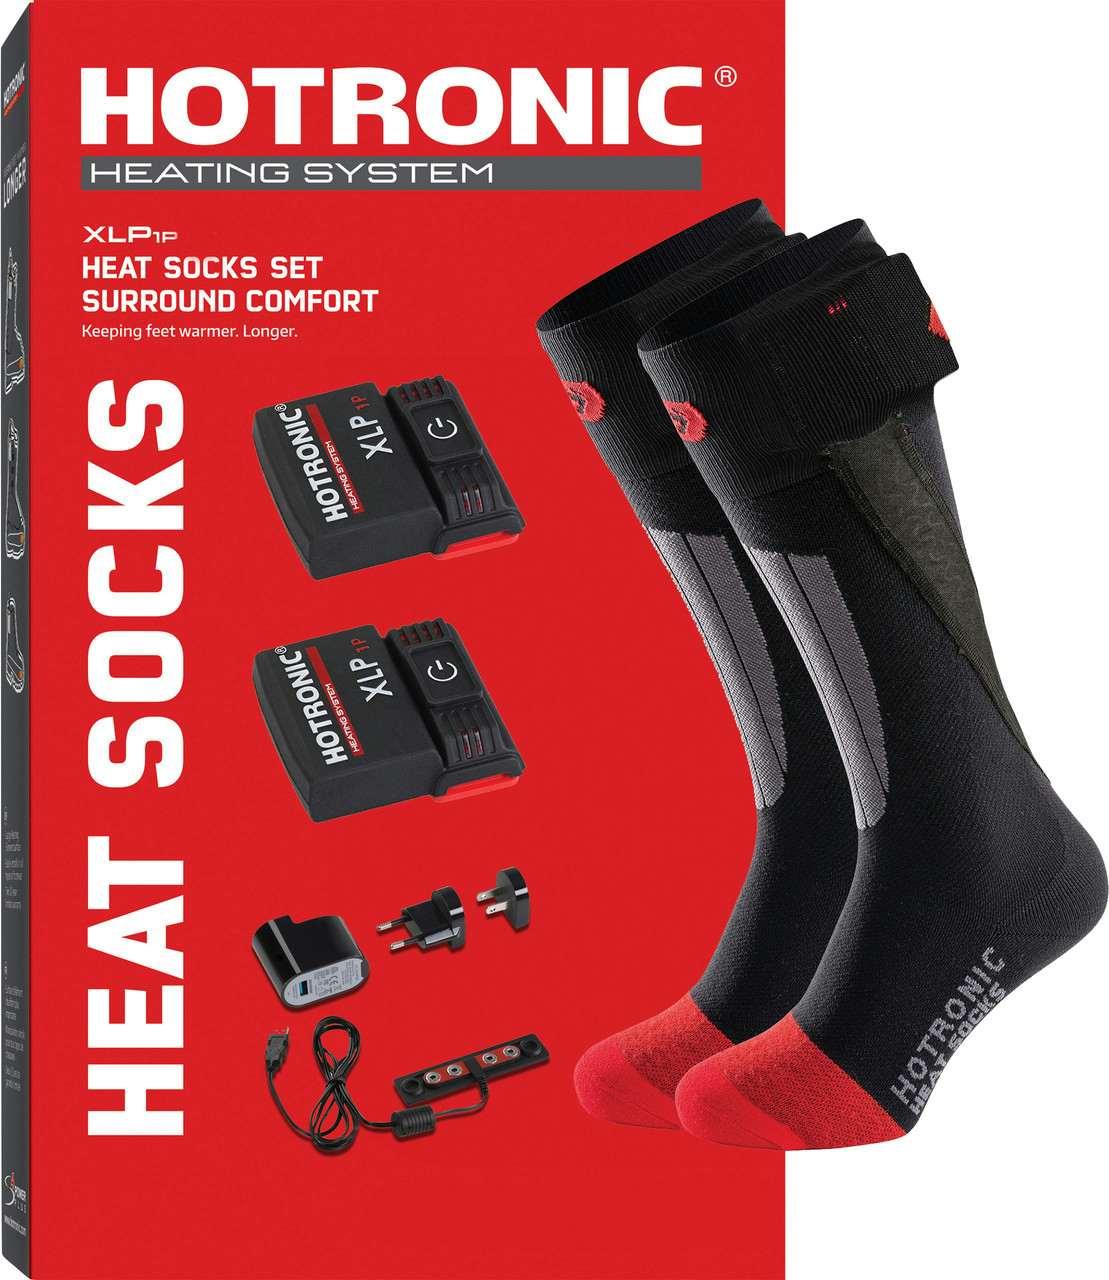 Heat Socks Set XLP 1P Classic Comfort Black/Red